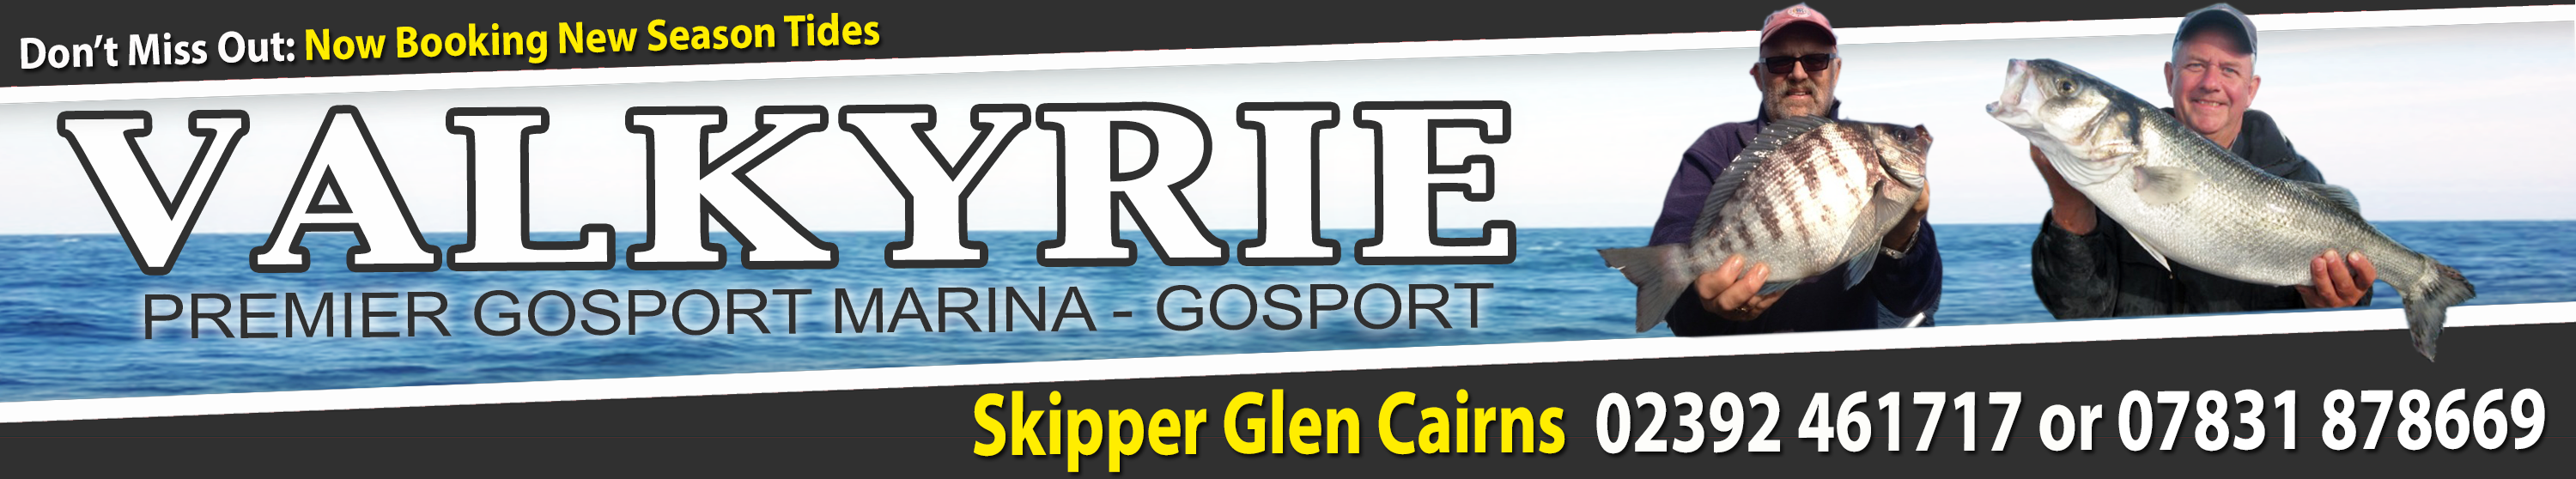 Valkyrie Charters - Premier Gosport Marina